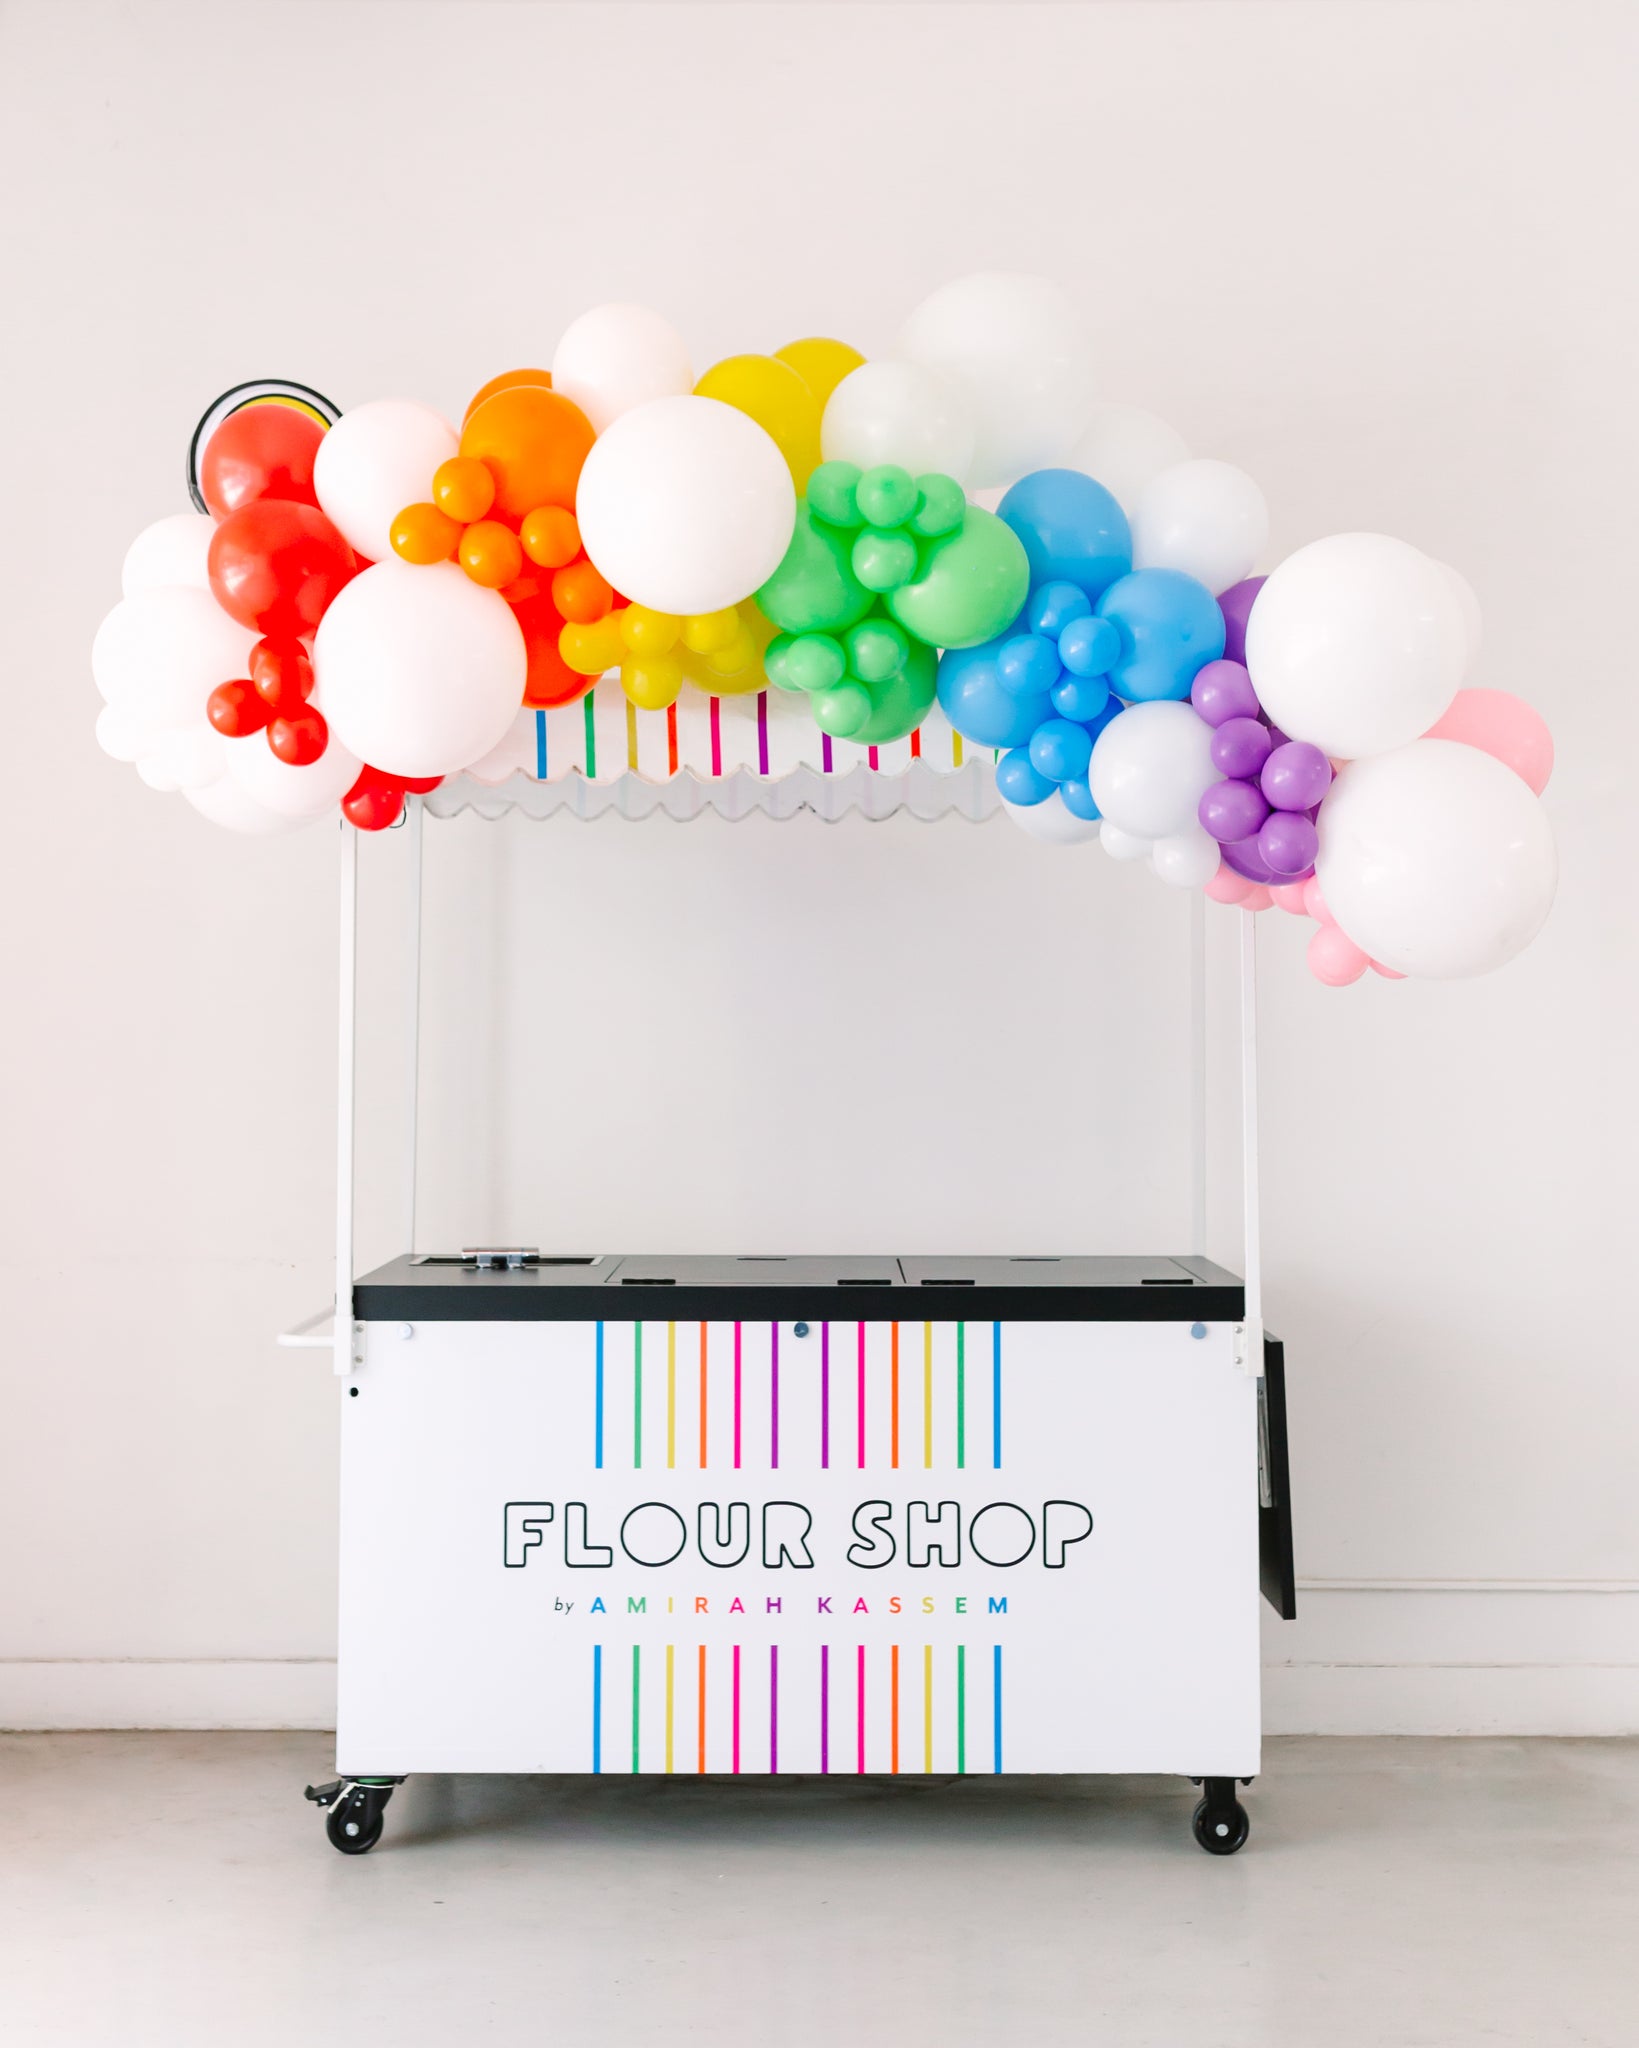 Rainbow balloon decoration ideas for a dessert catering cart.